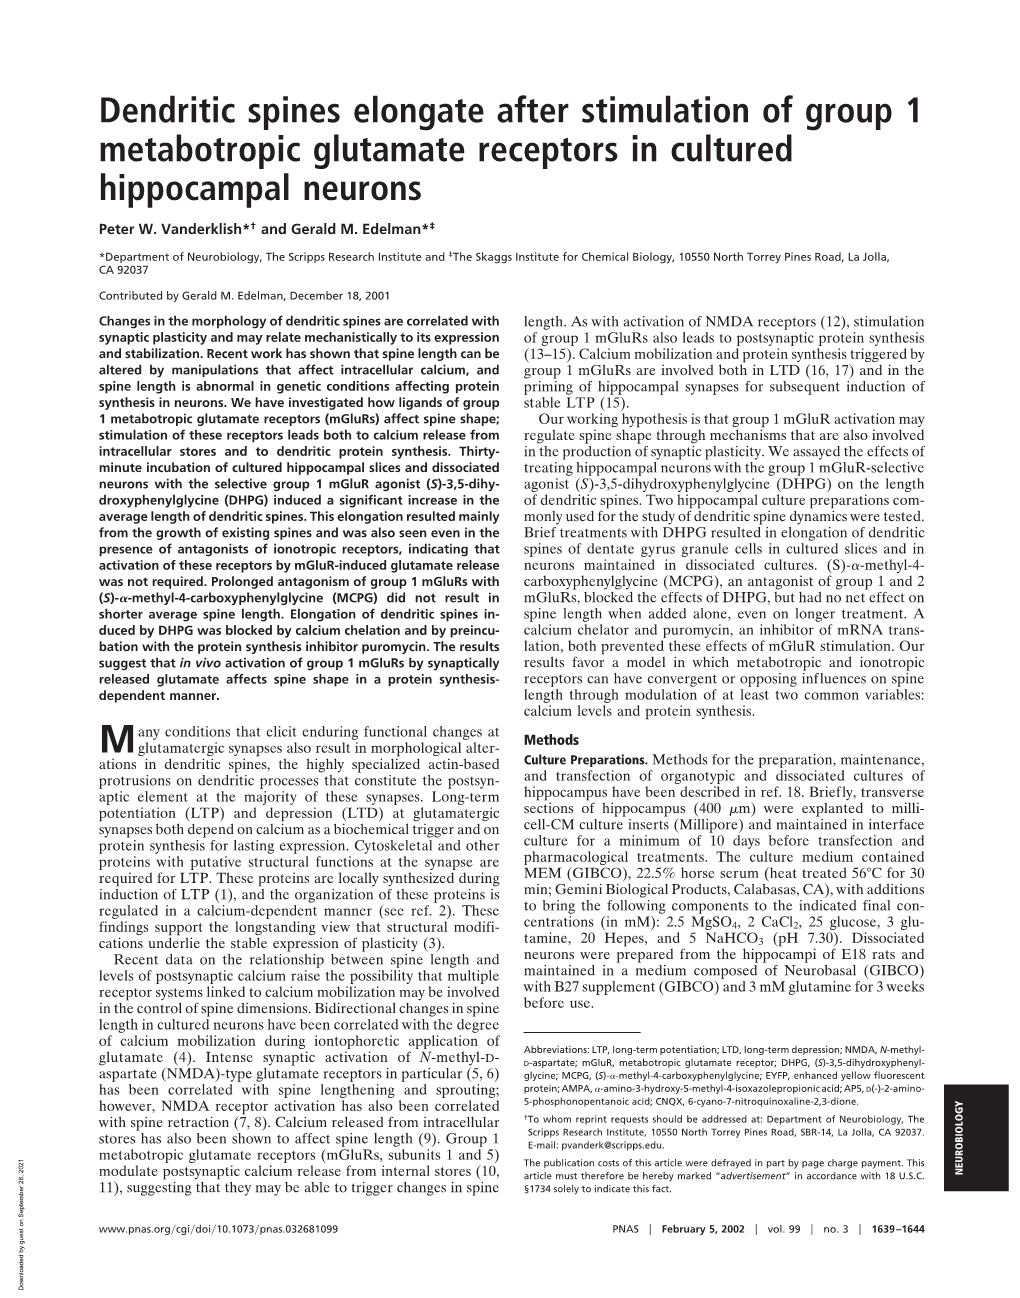 Dendritic Spines Elongate After Stimulation of Group 1 Metabotropic Glutamate Receptors in Cultured Hippocampal Neurons